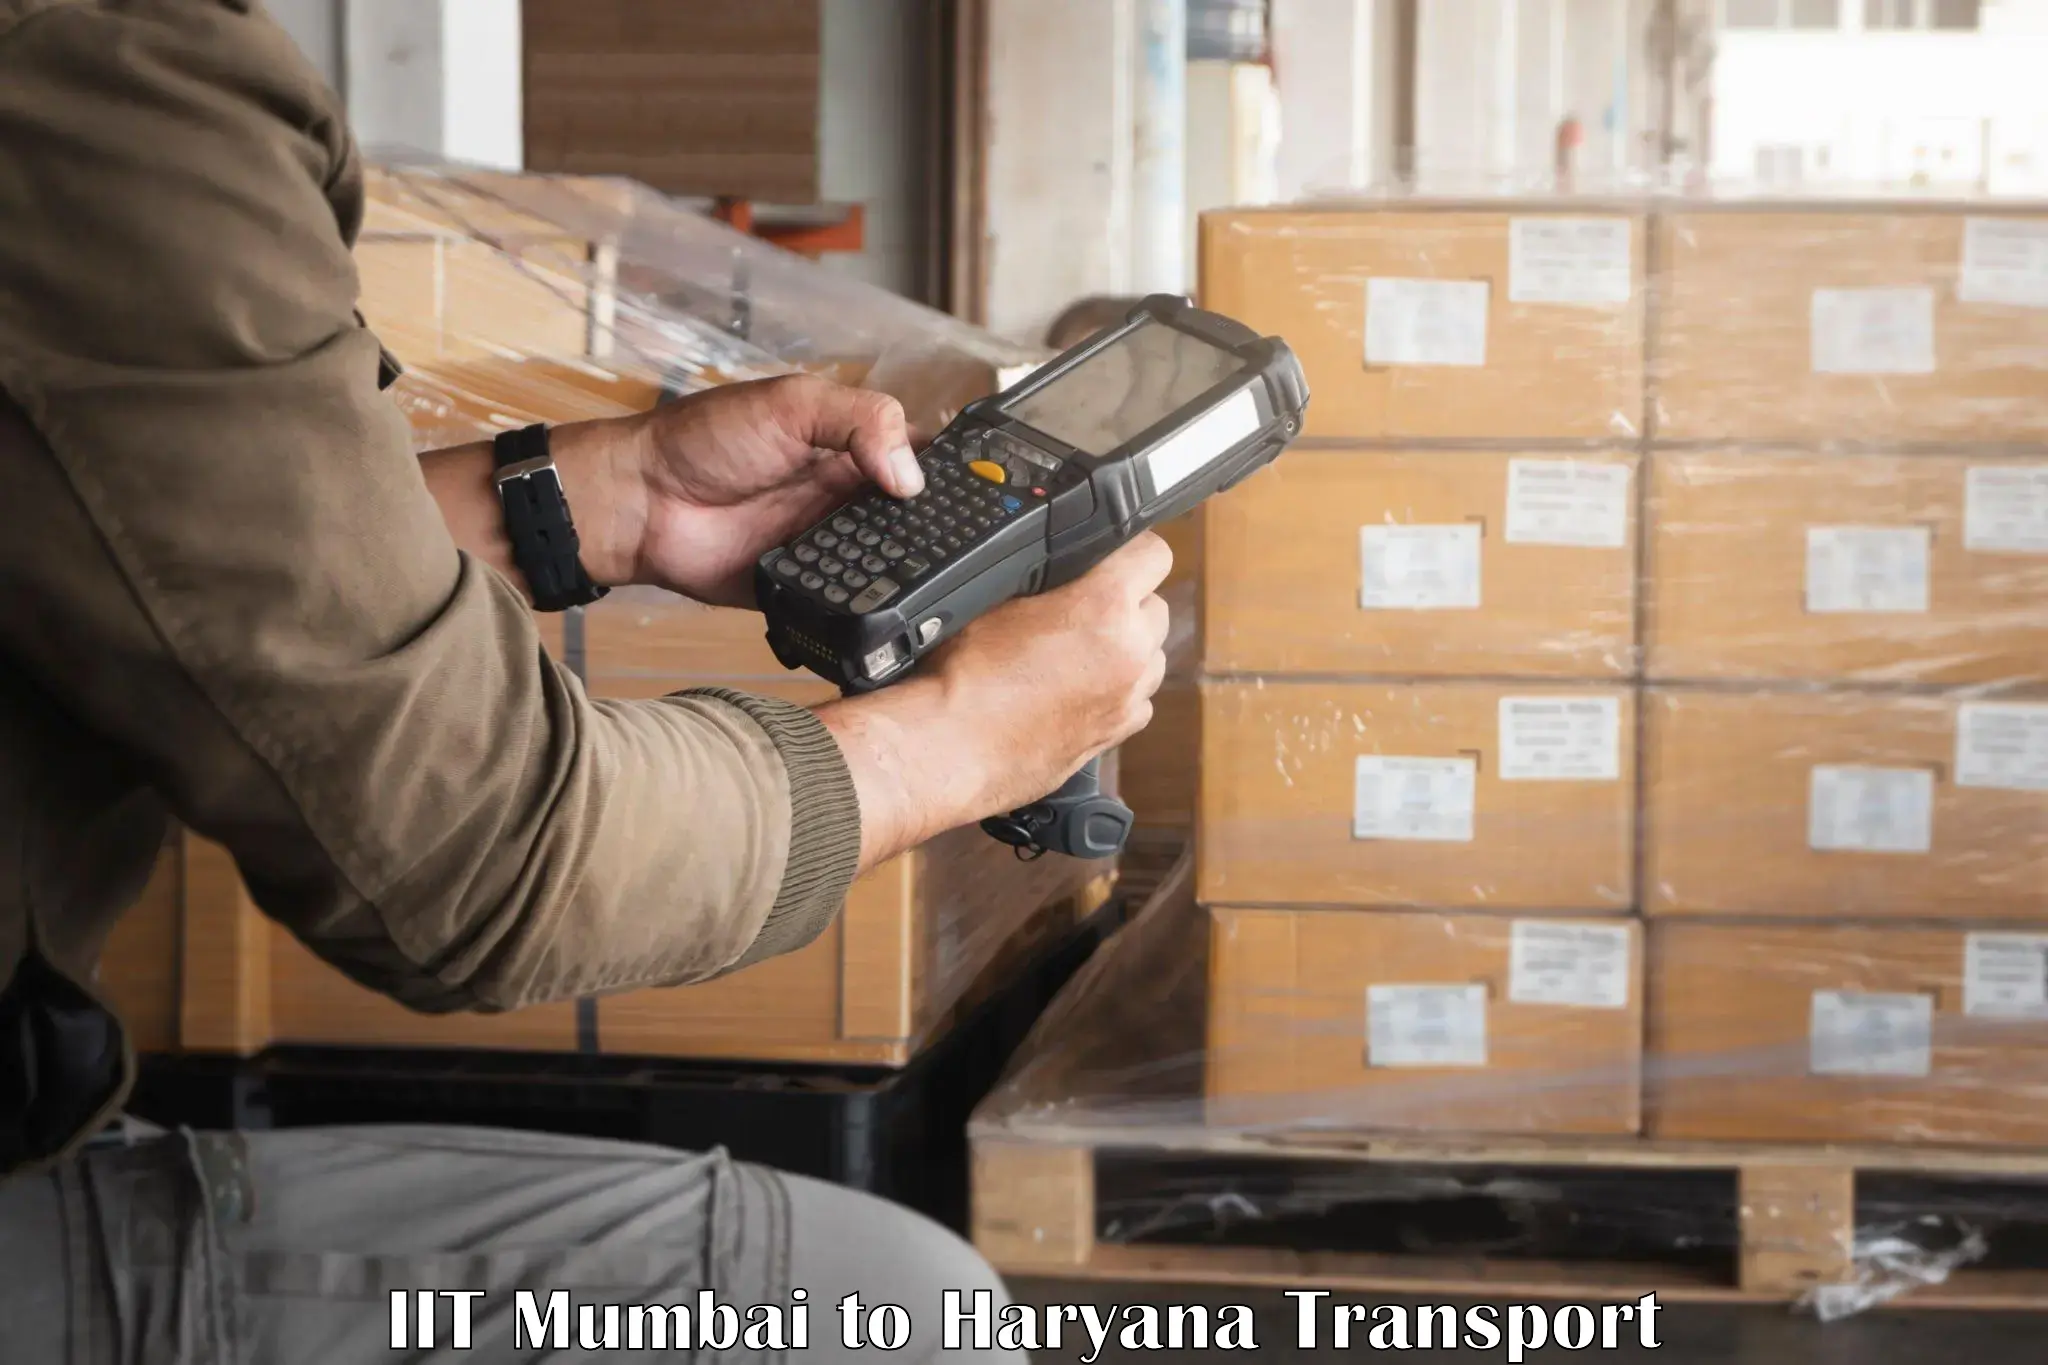 Bike shipping service IIT Mumbai to Haryana